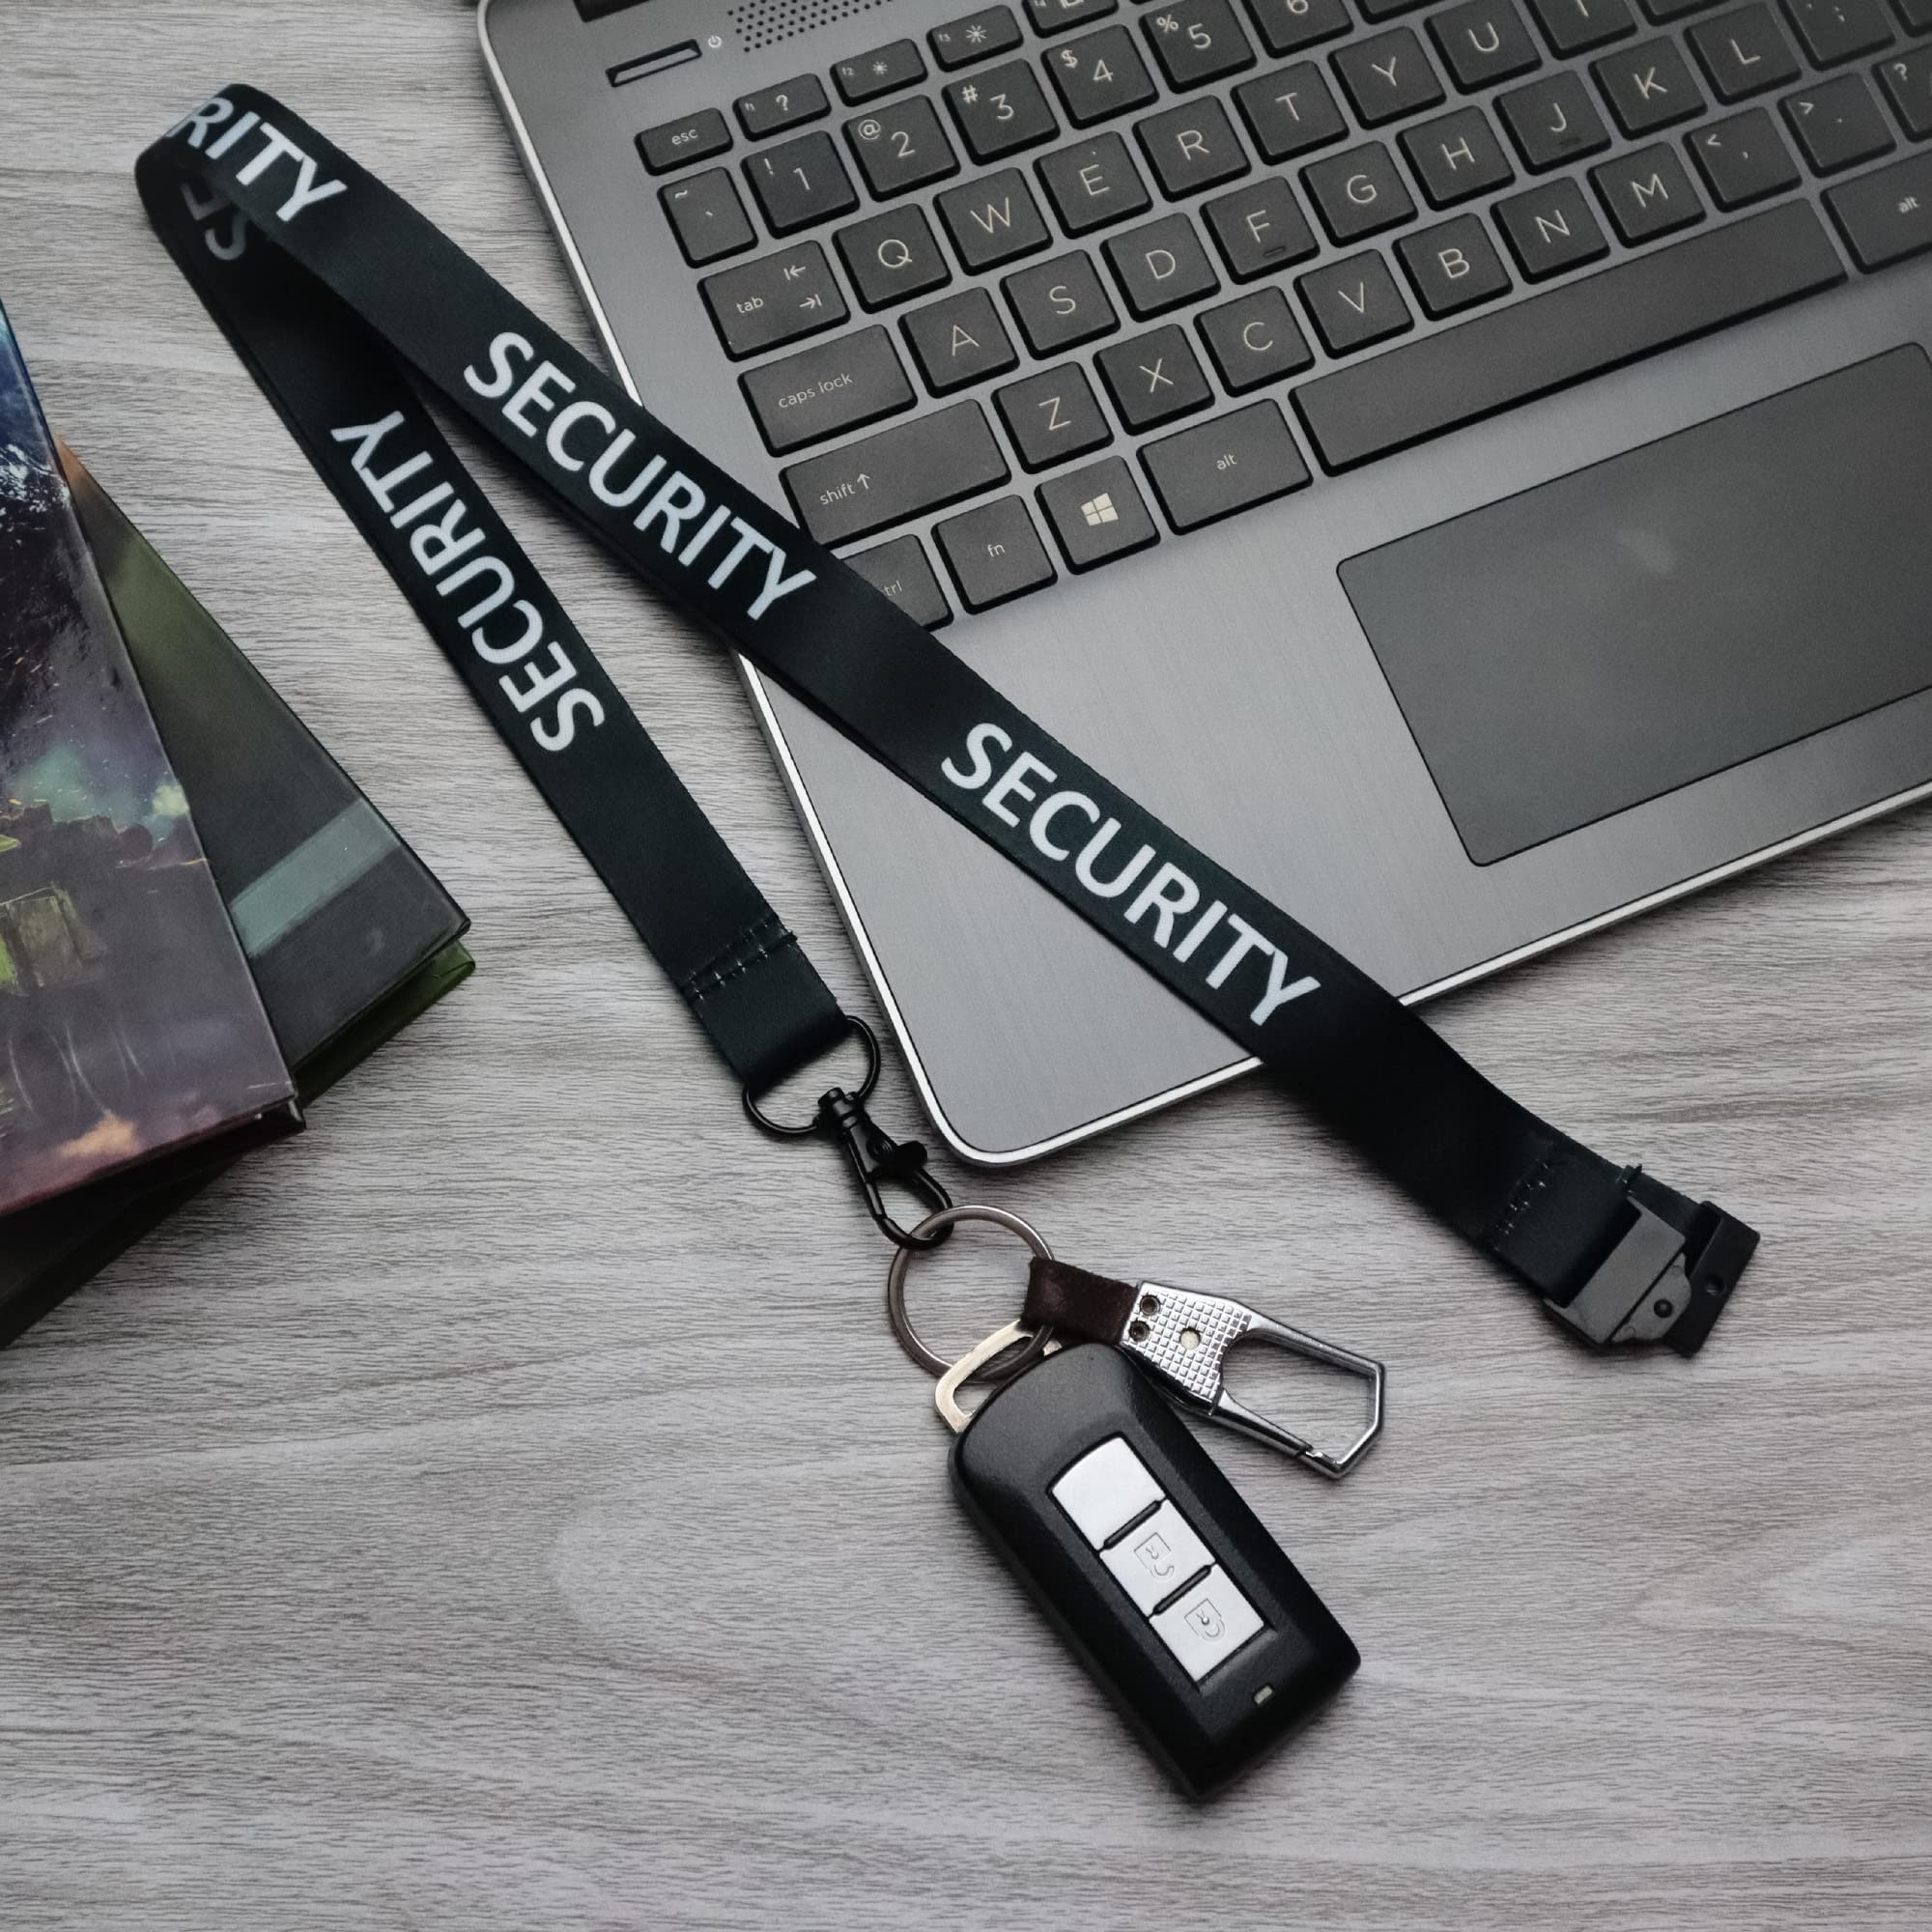 Security Lanyard (amazon.com)